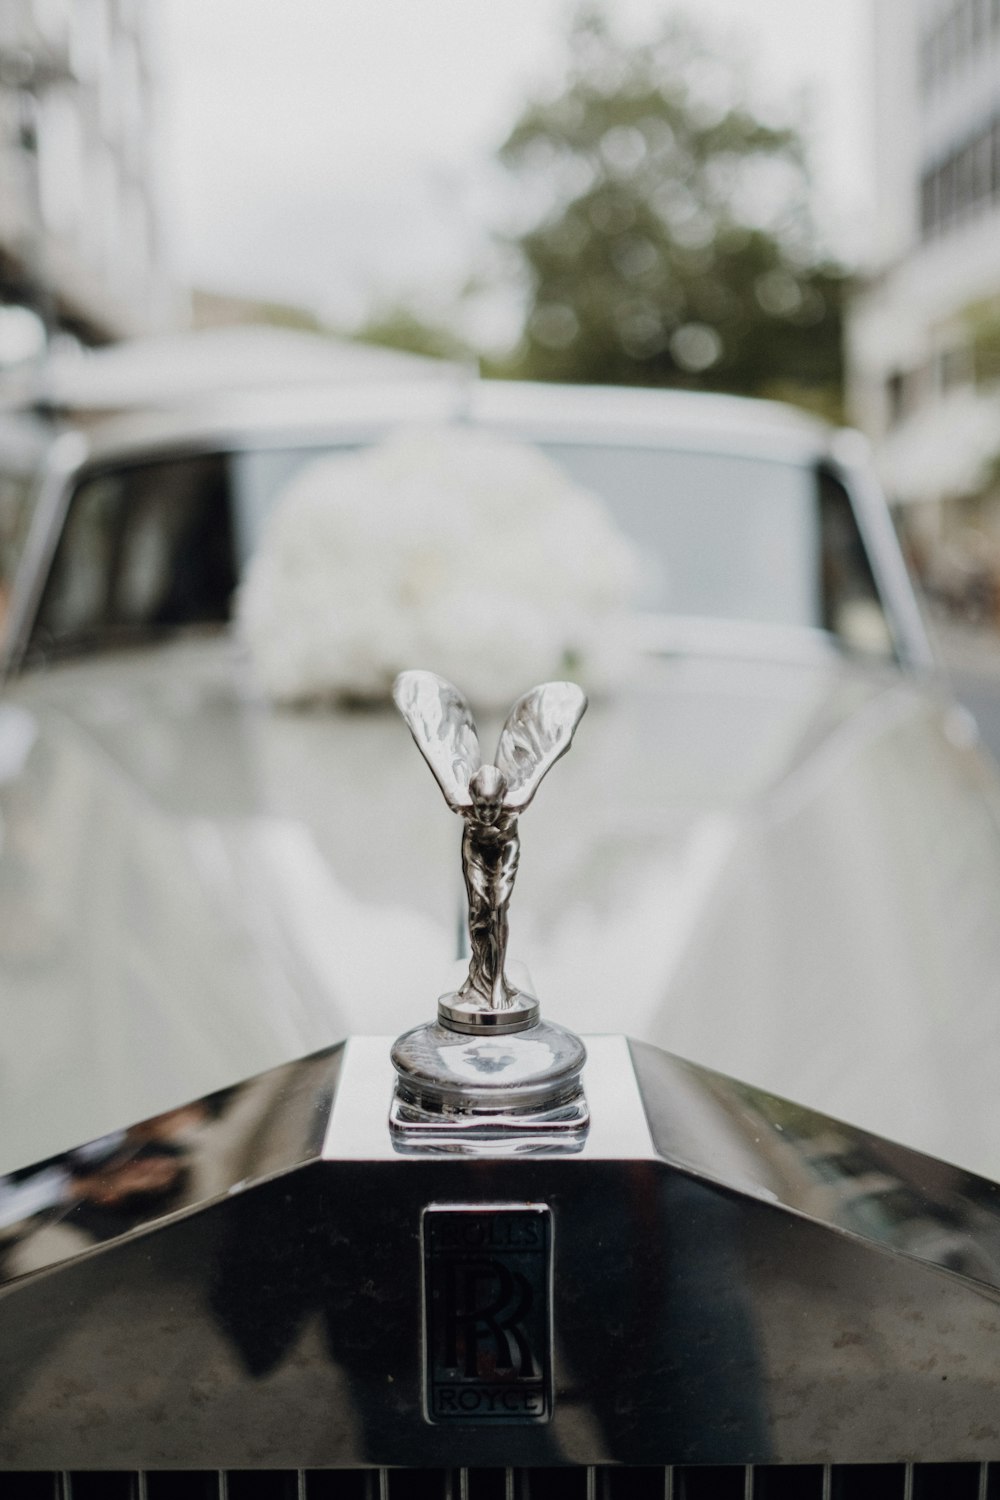 silver angel figurine on car photo – Free Grey Image on Unsplash